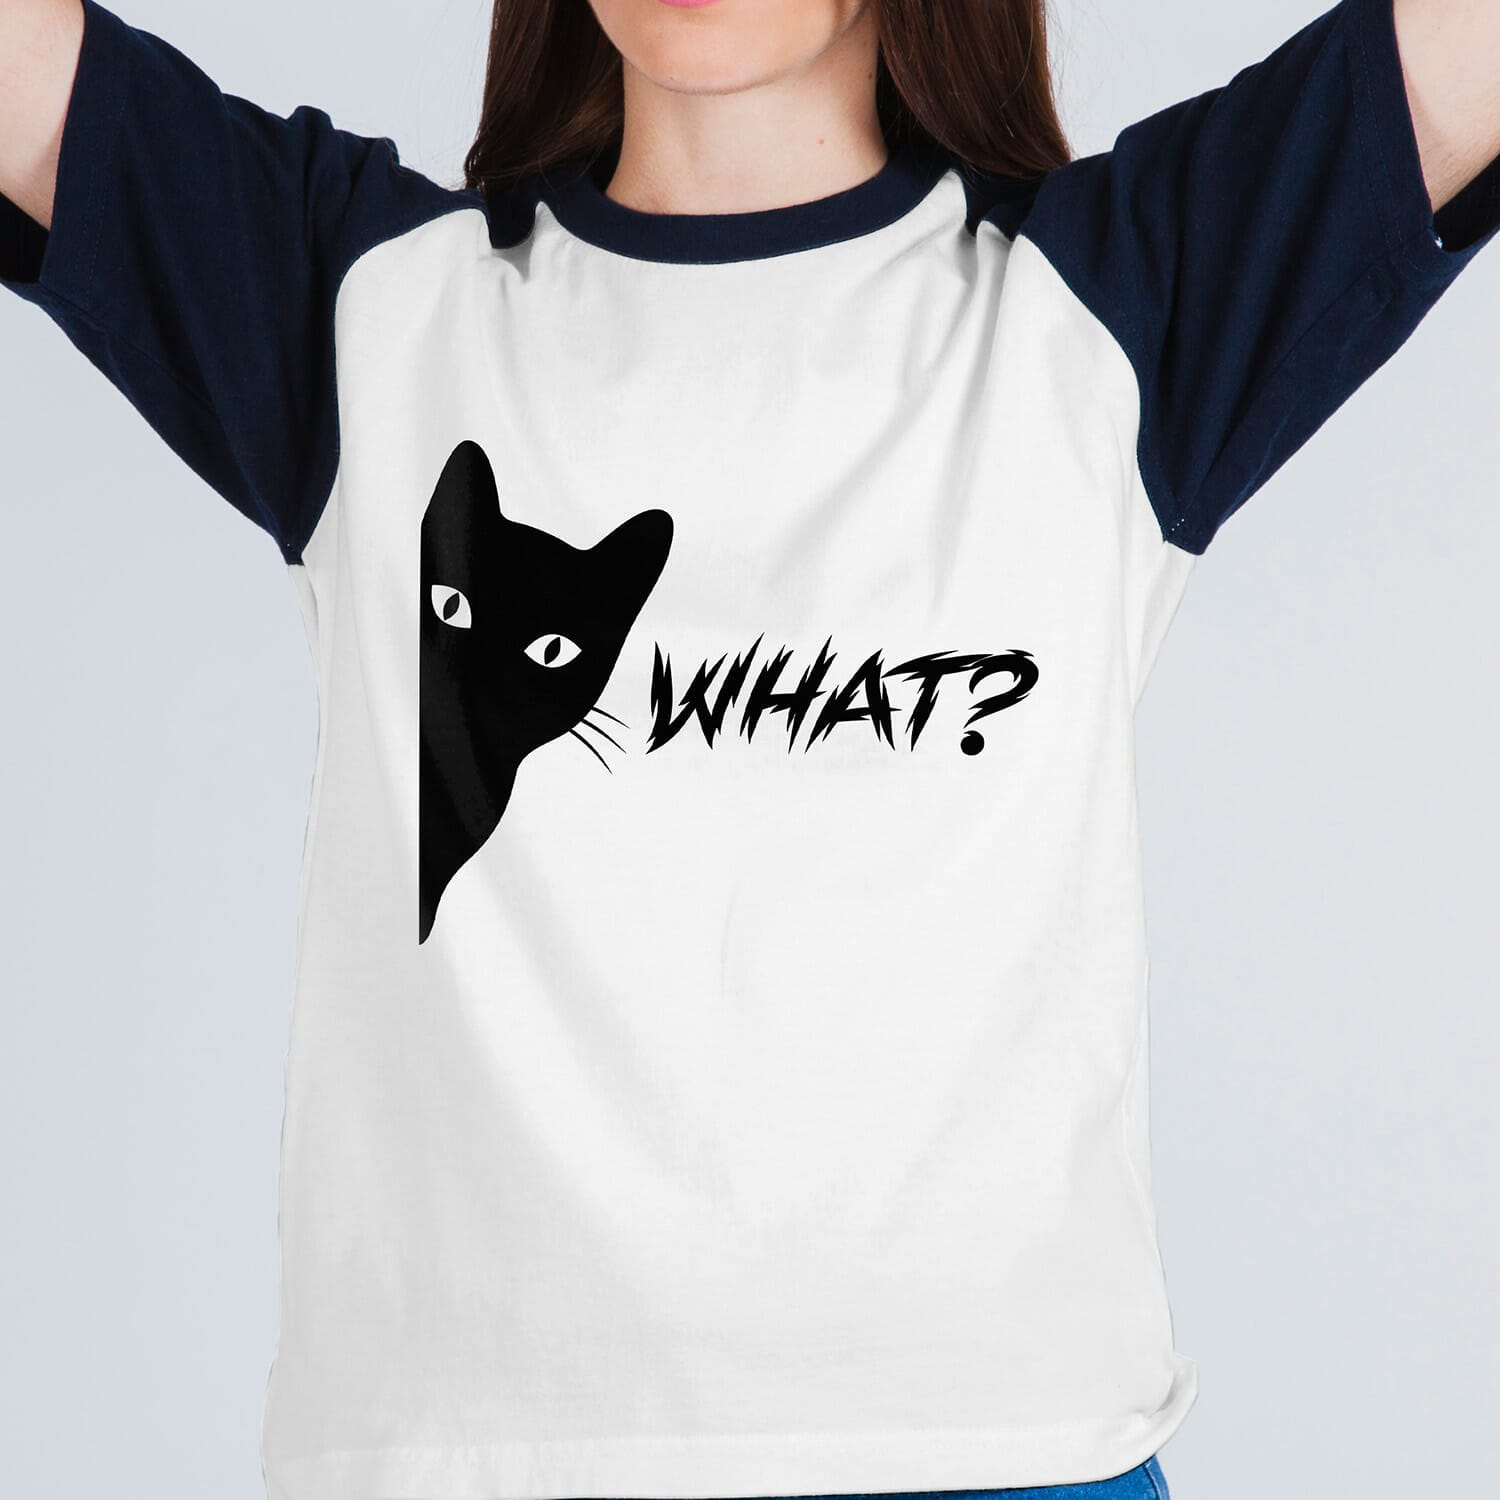 Cat what? Funny tshirt design